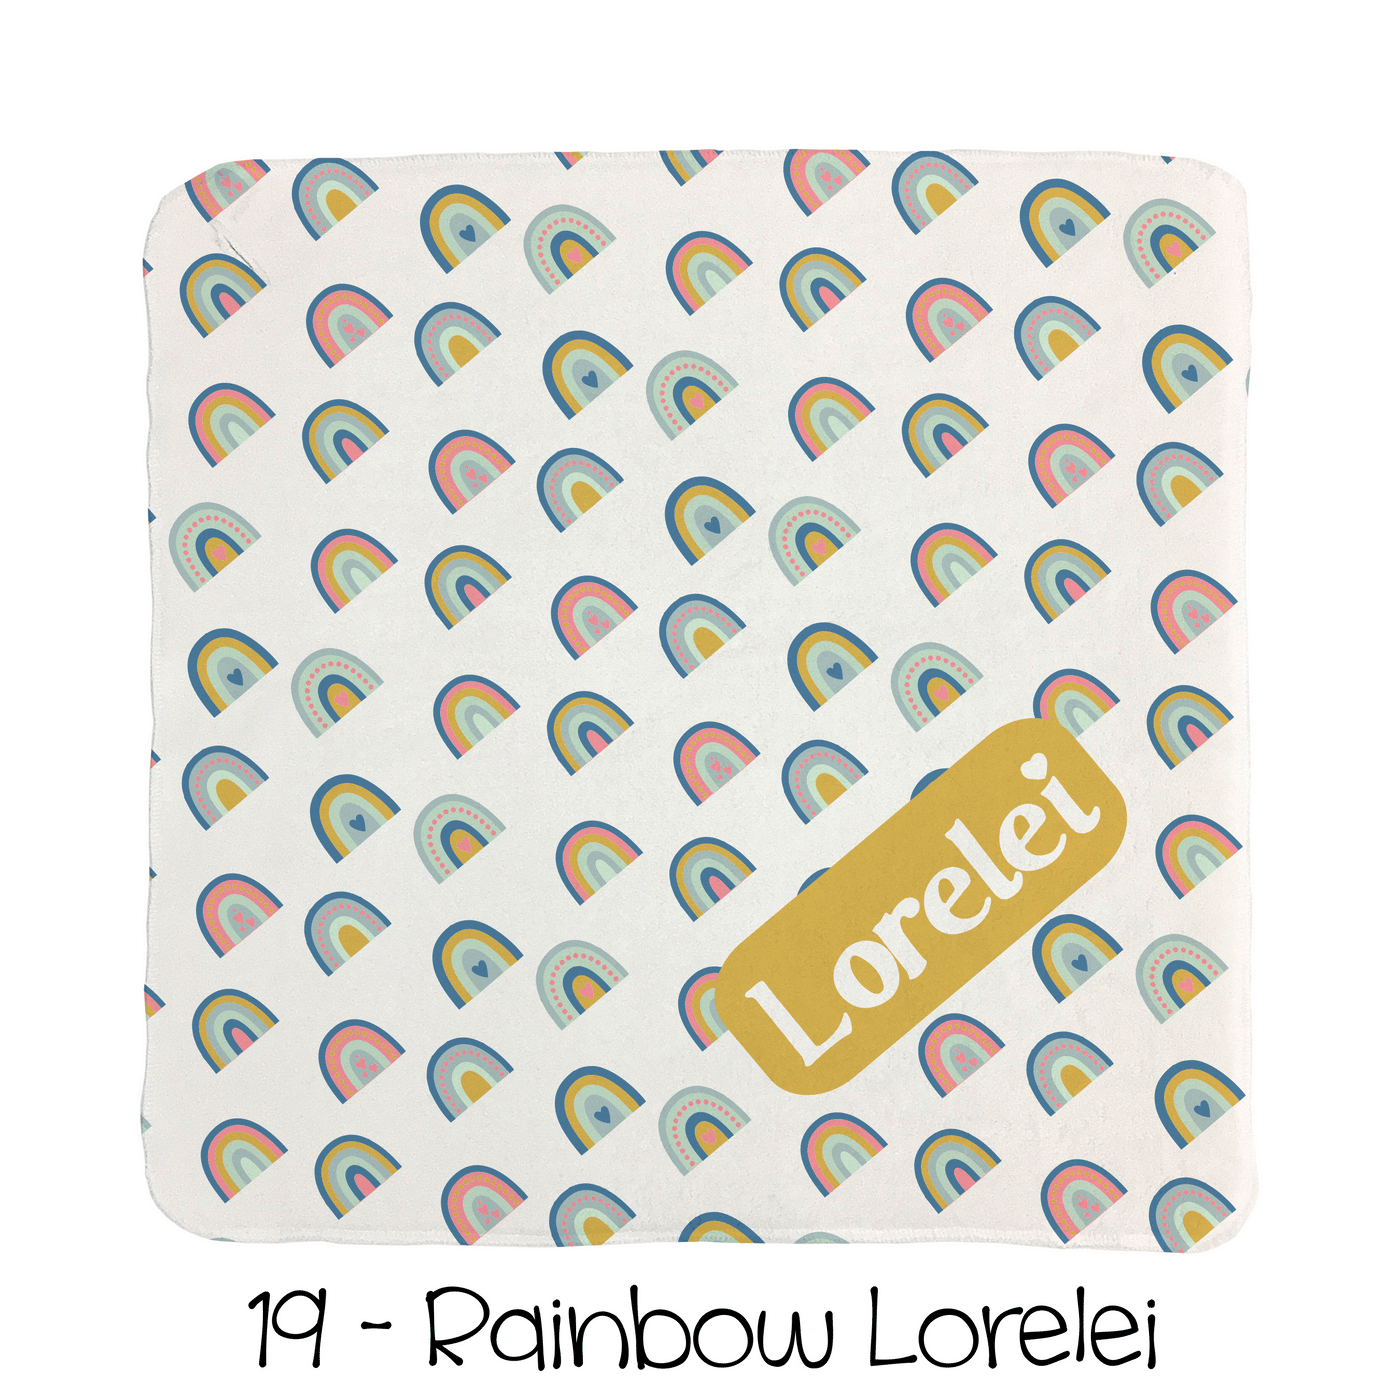 Rainbow Lovie Collection -Multiple Options!